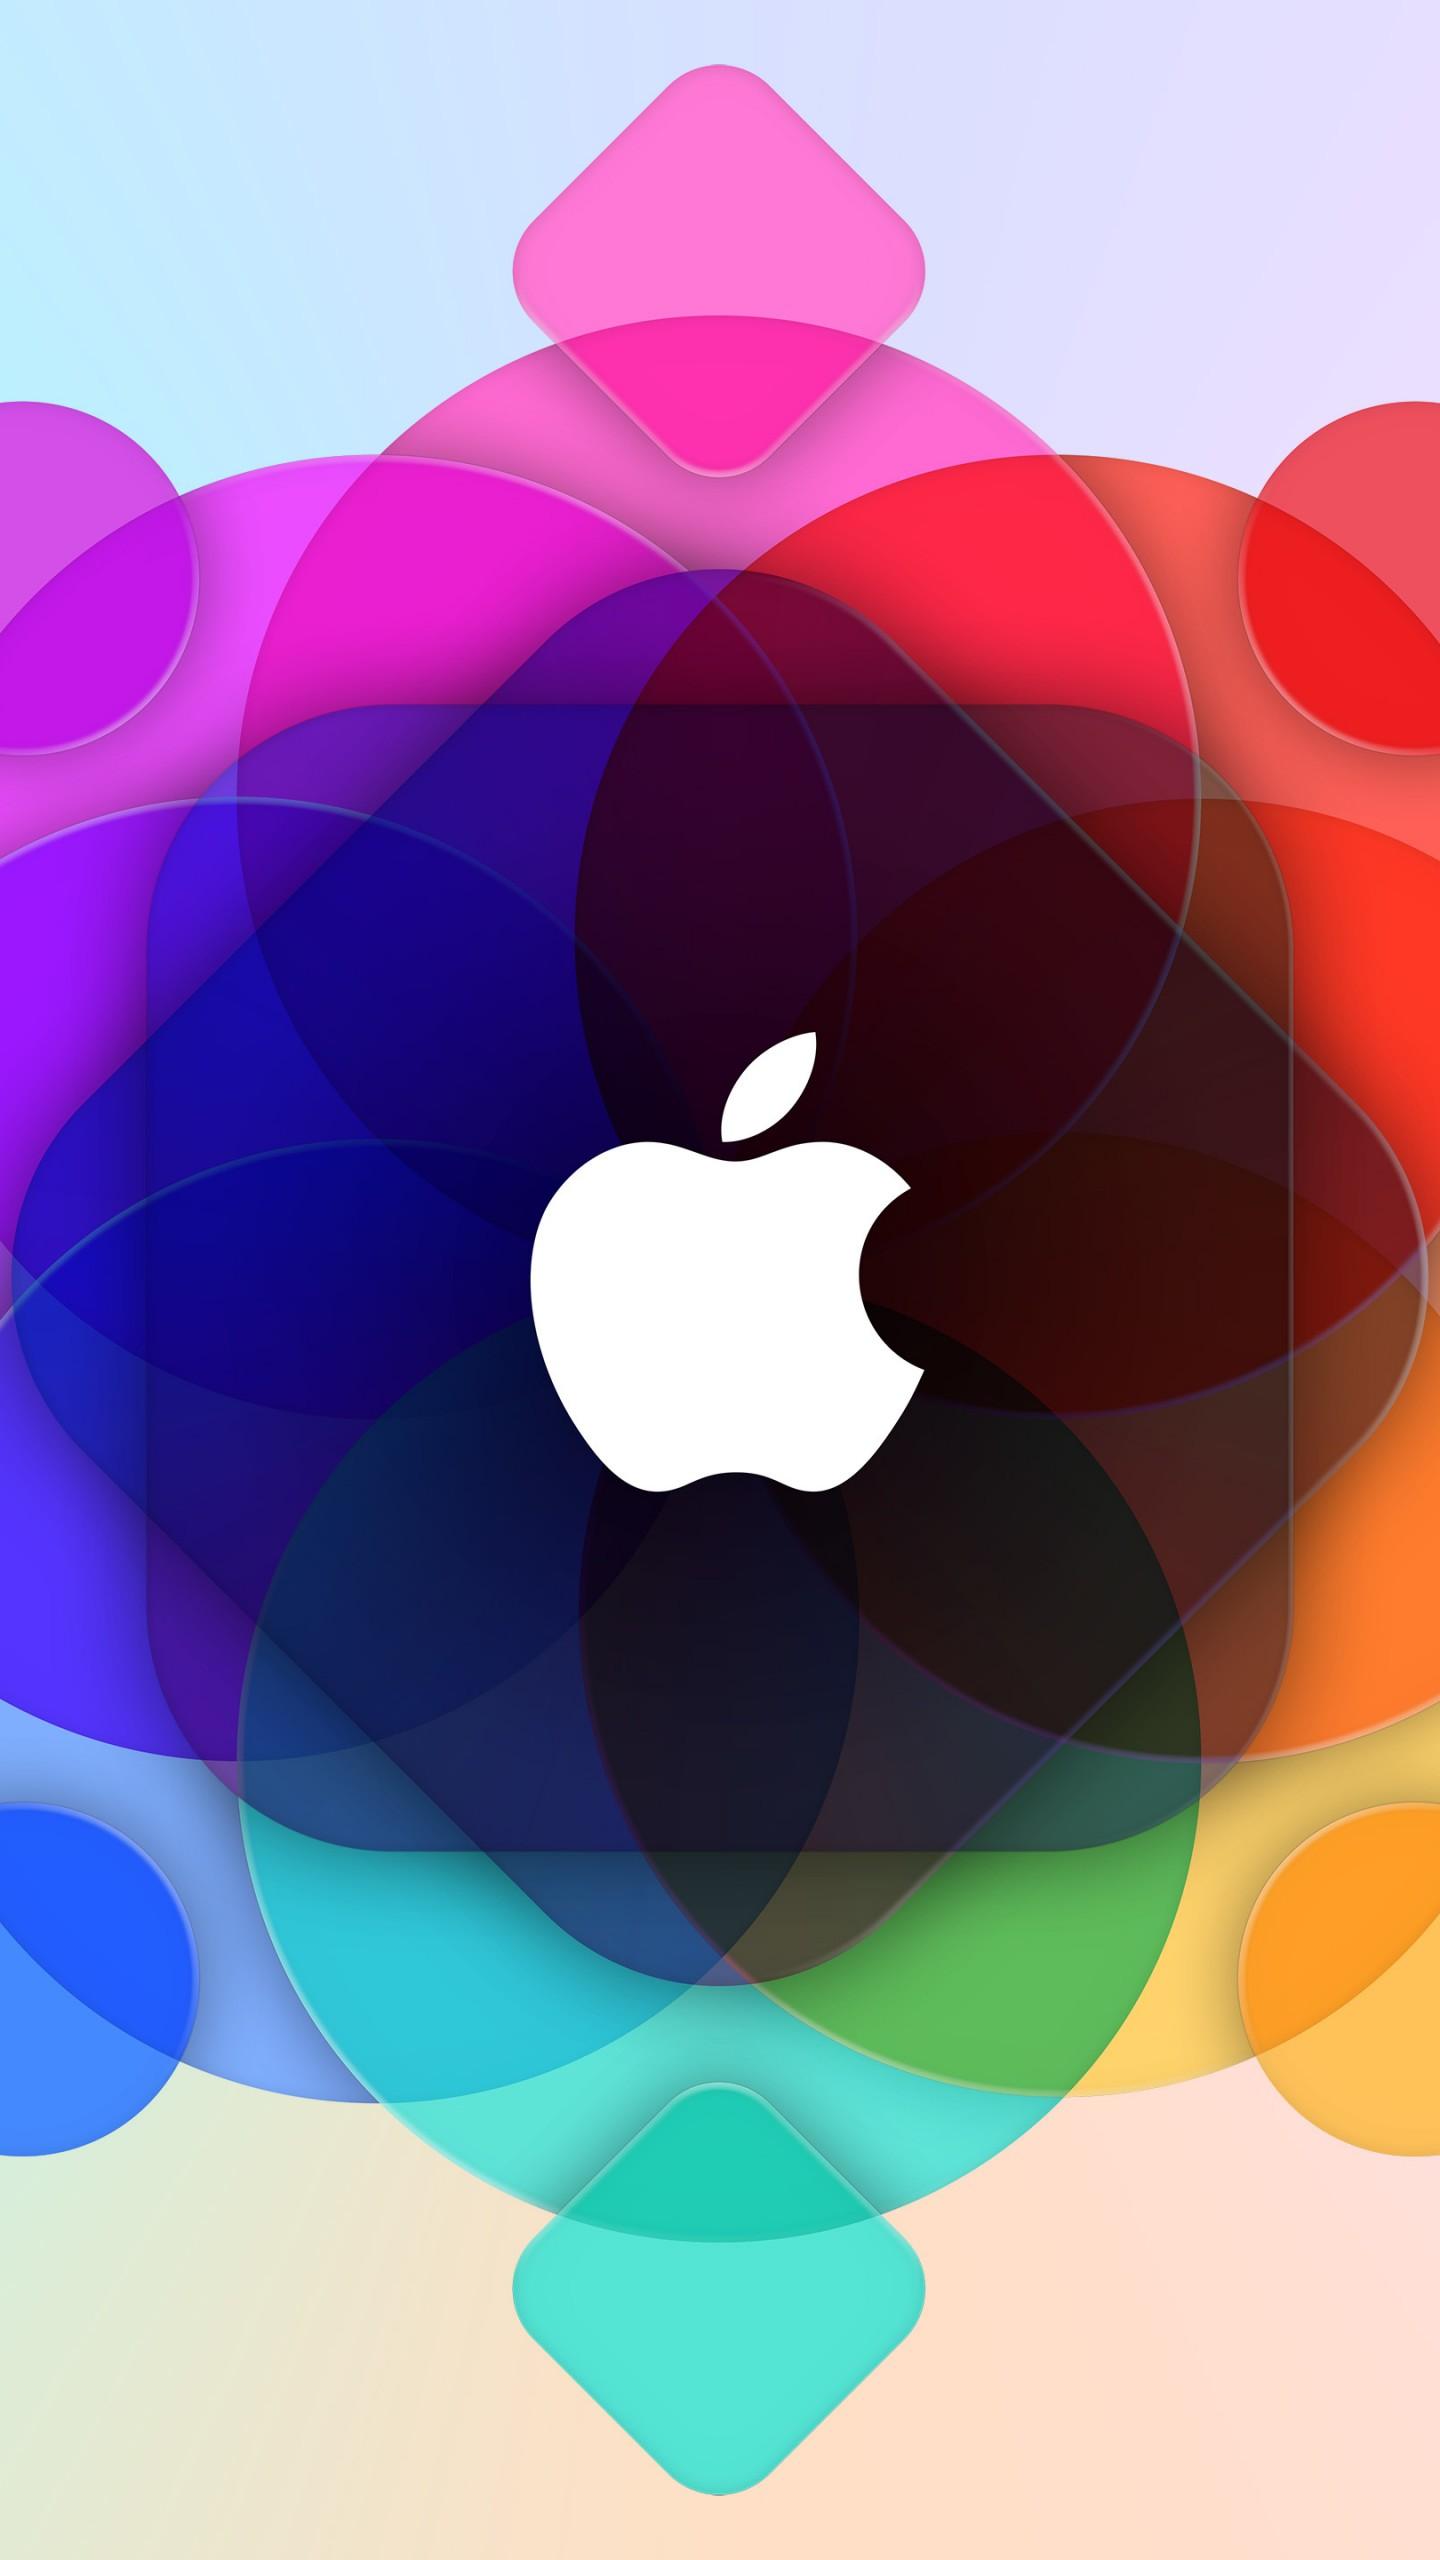 Apple logo engraved on wooden floor 4K wallpaper download